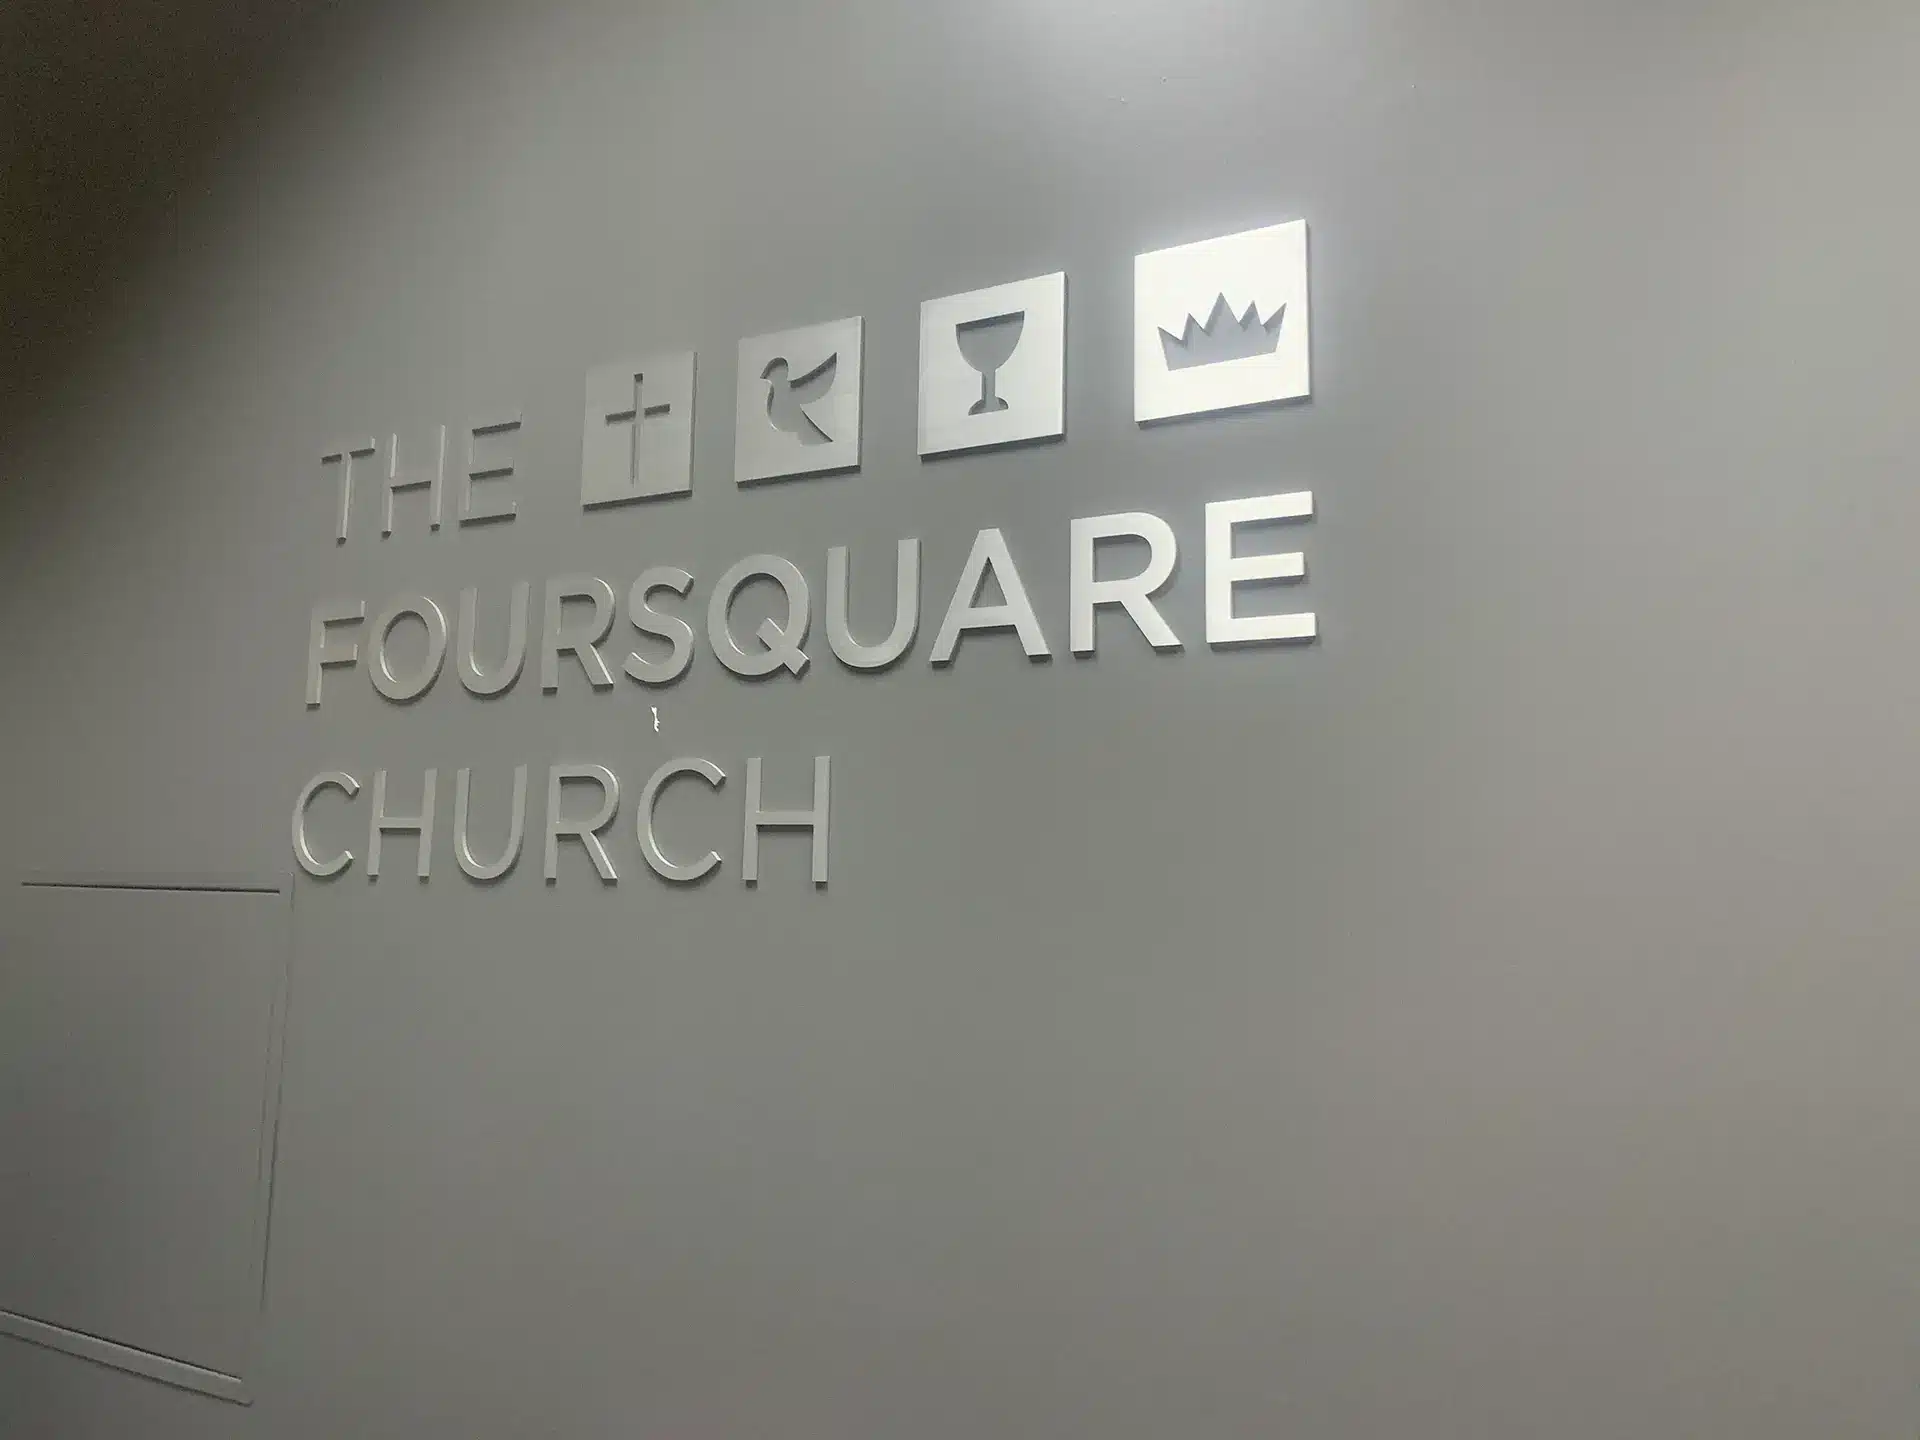 The Foursquare Church in Los Angeles